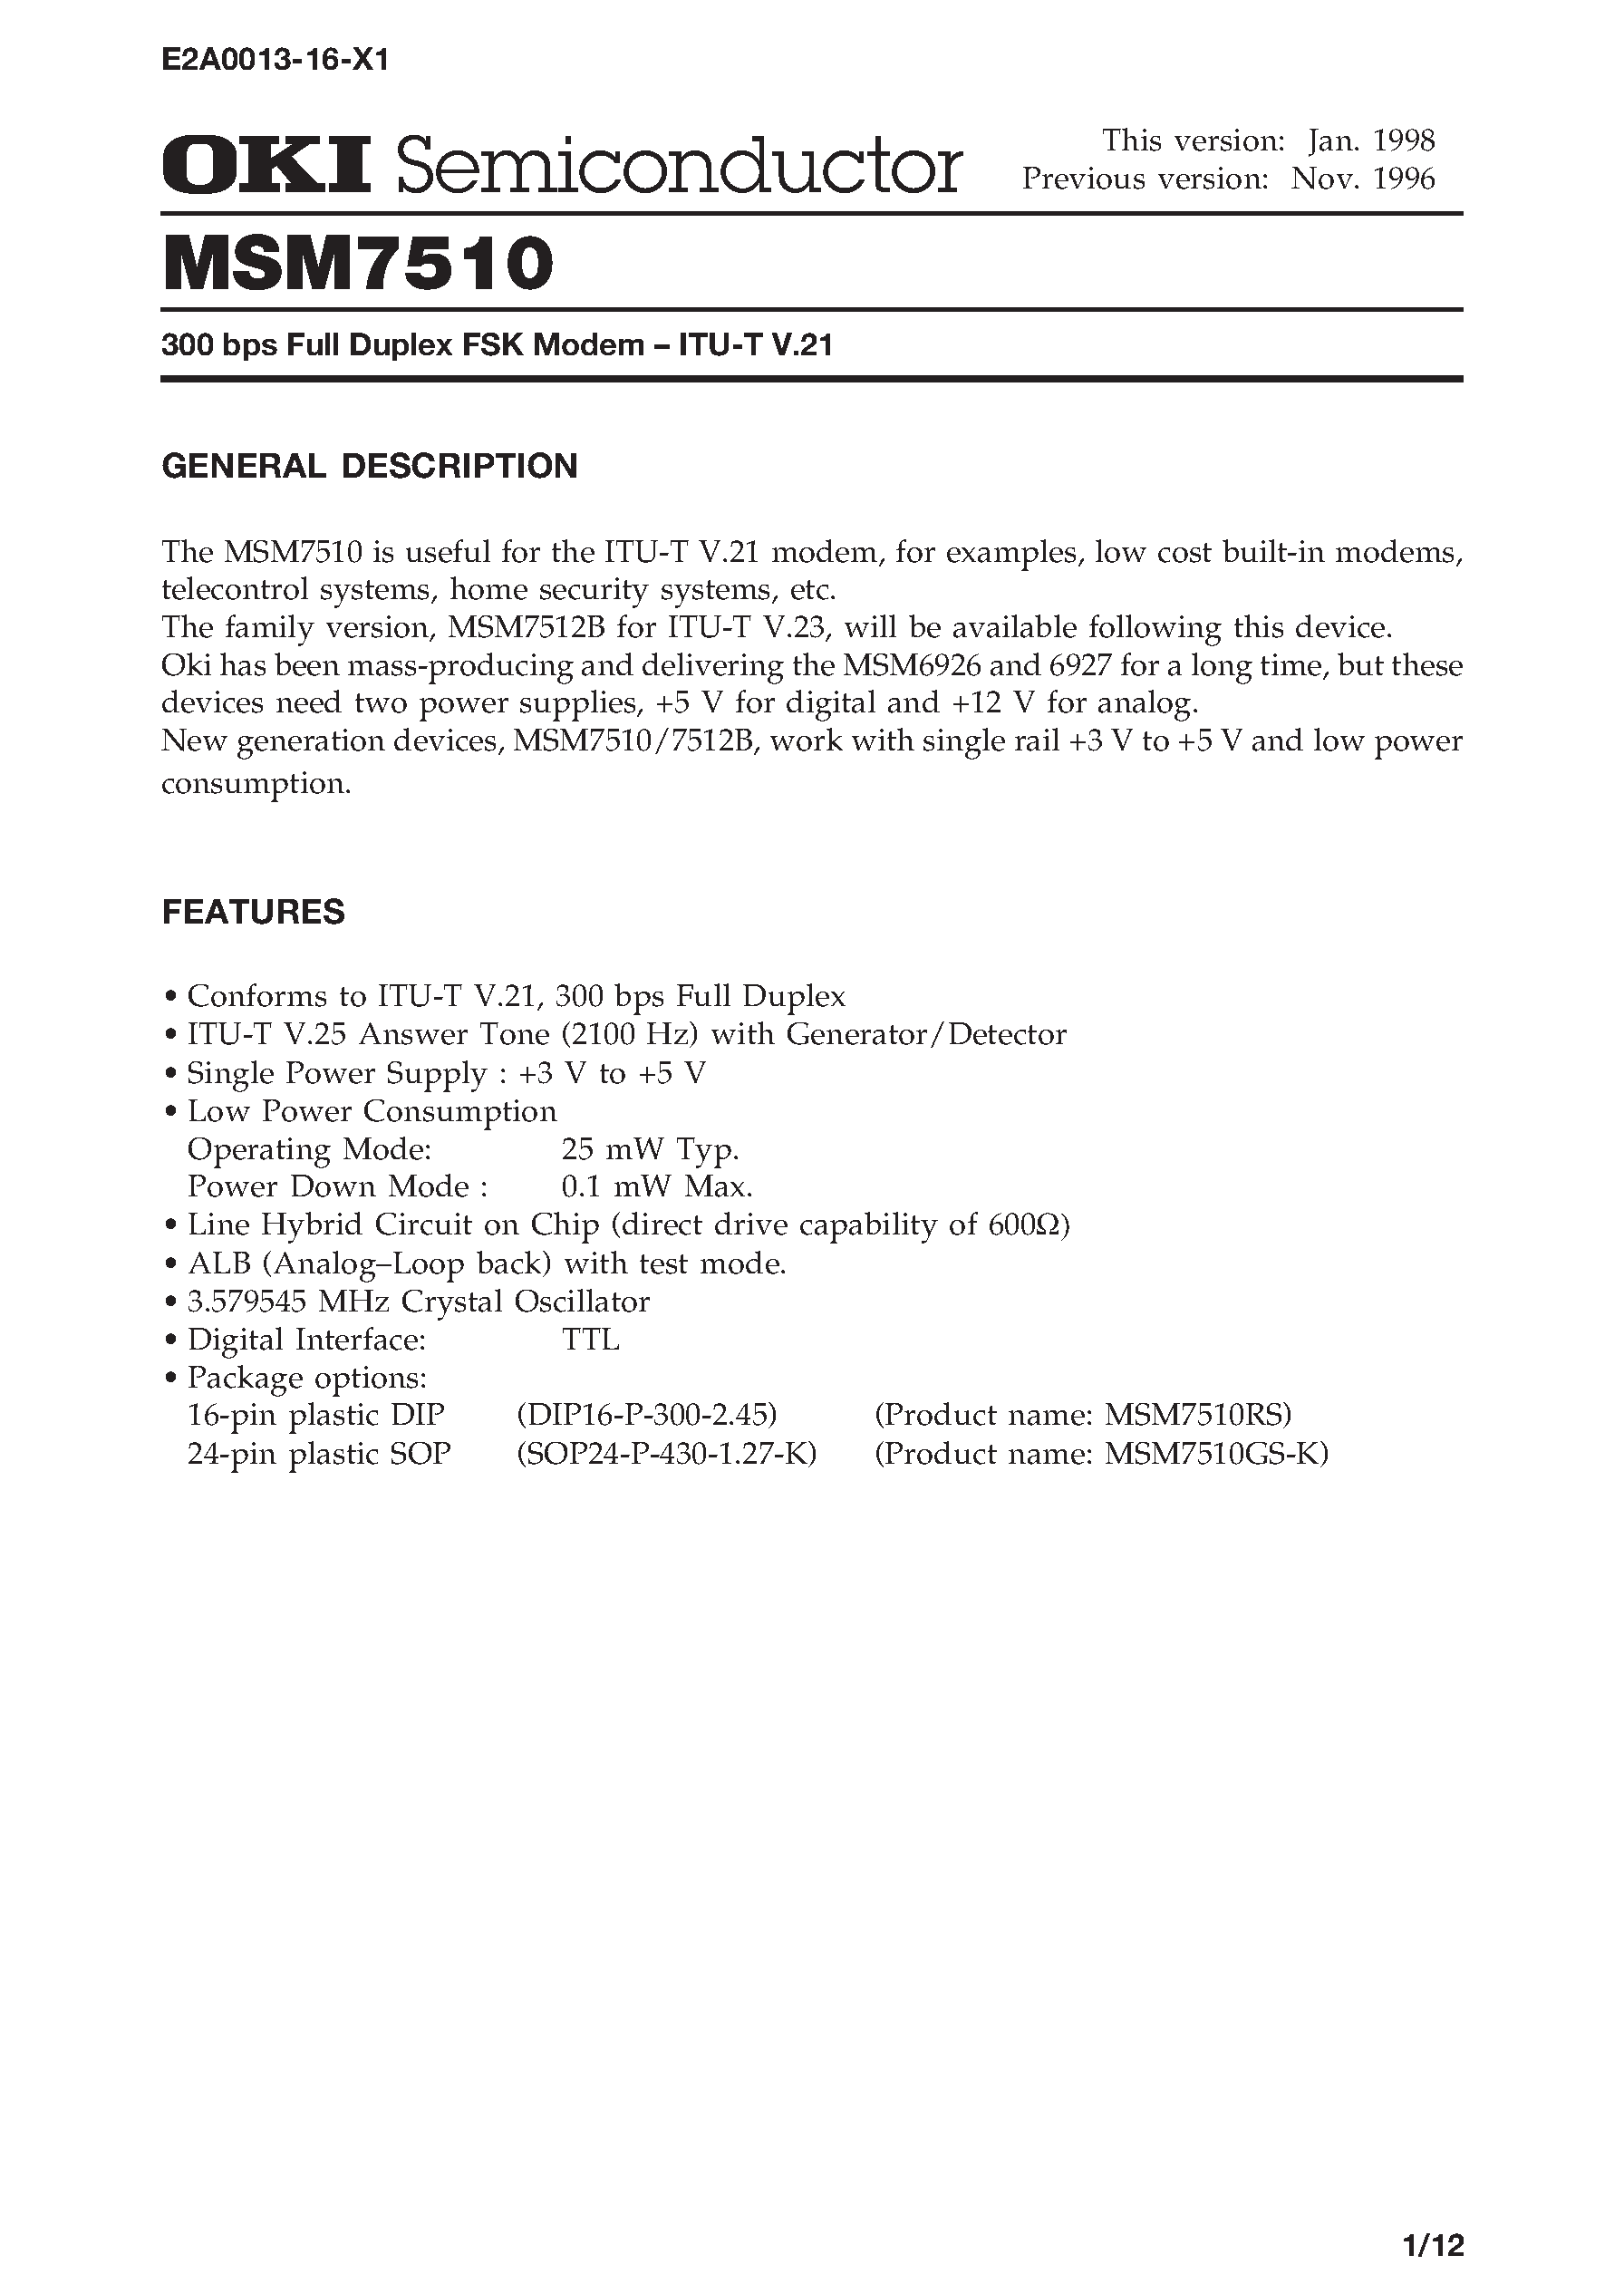 Datasheet MSM7510 - 300 bps Full Duplex FSK Modem - ITU-T V.21 page 1